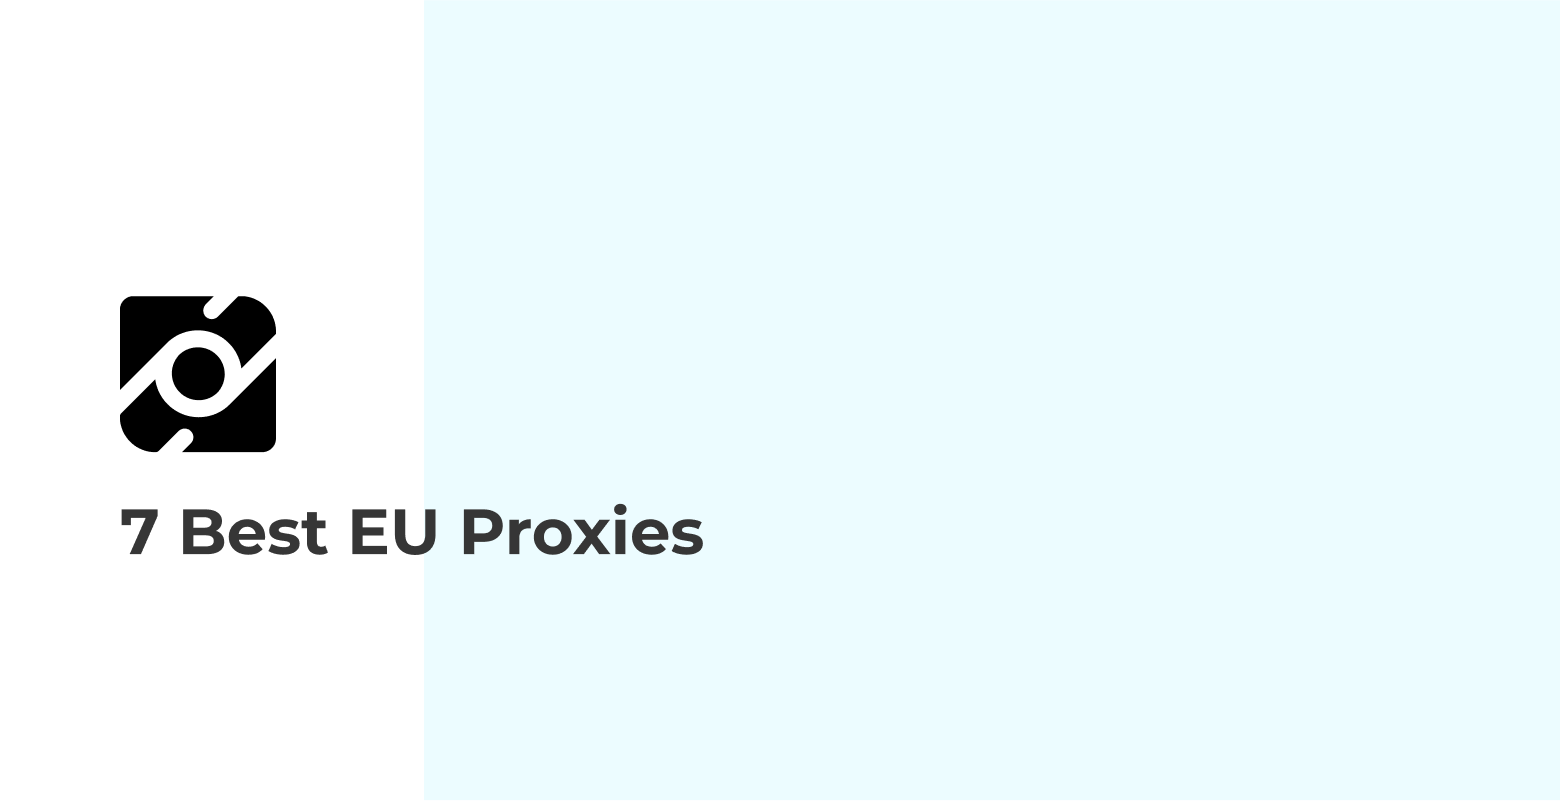 7 Best EU Proxies